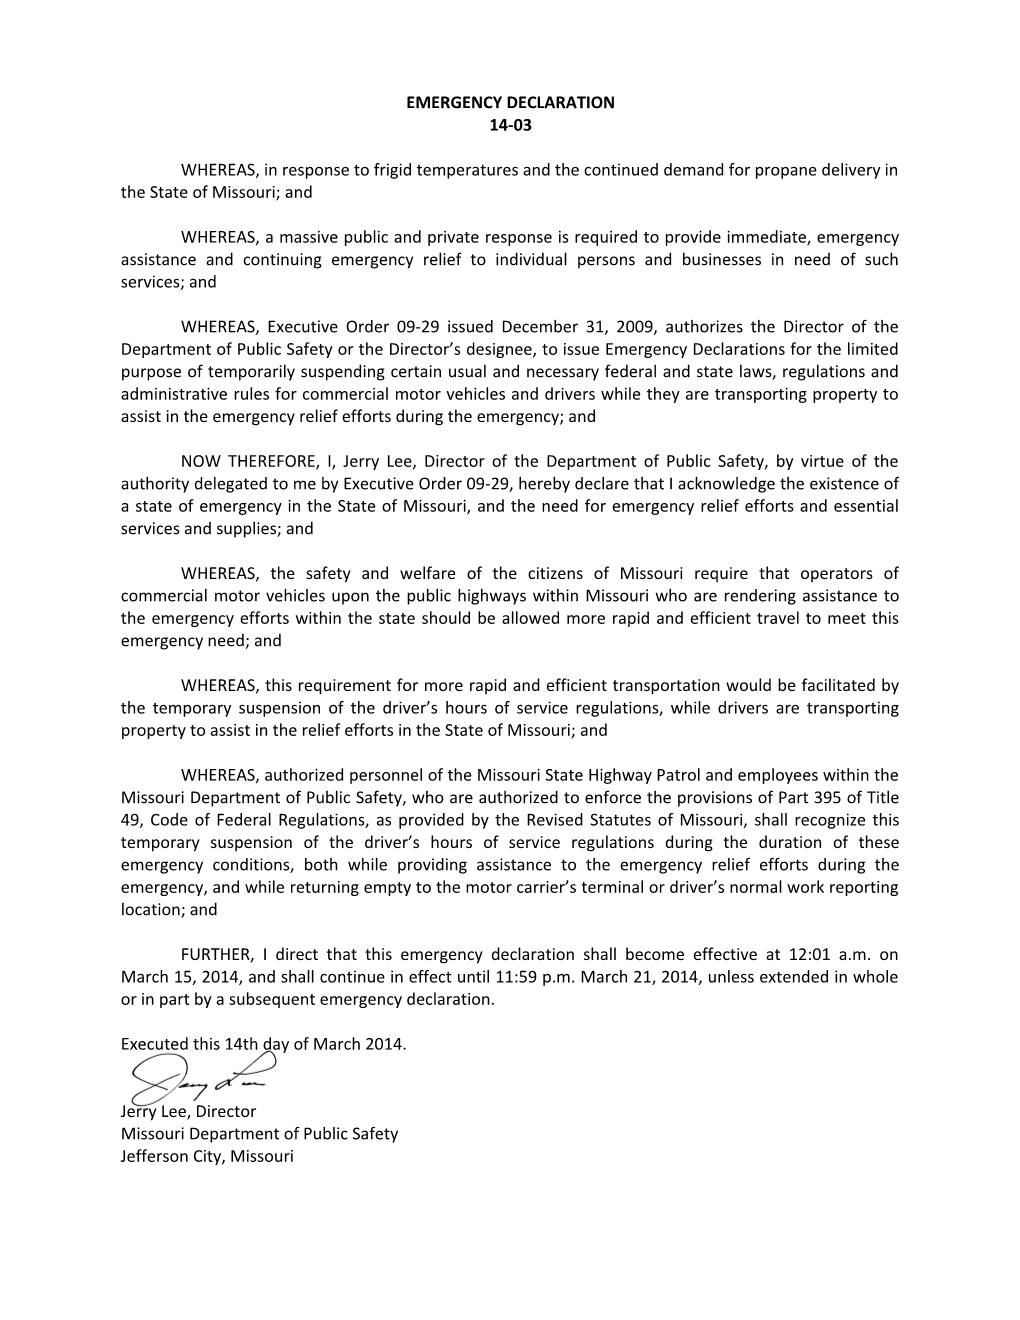 Emergency Declaration Cover Letter